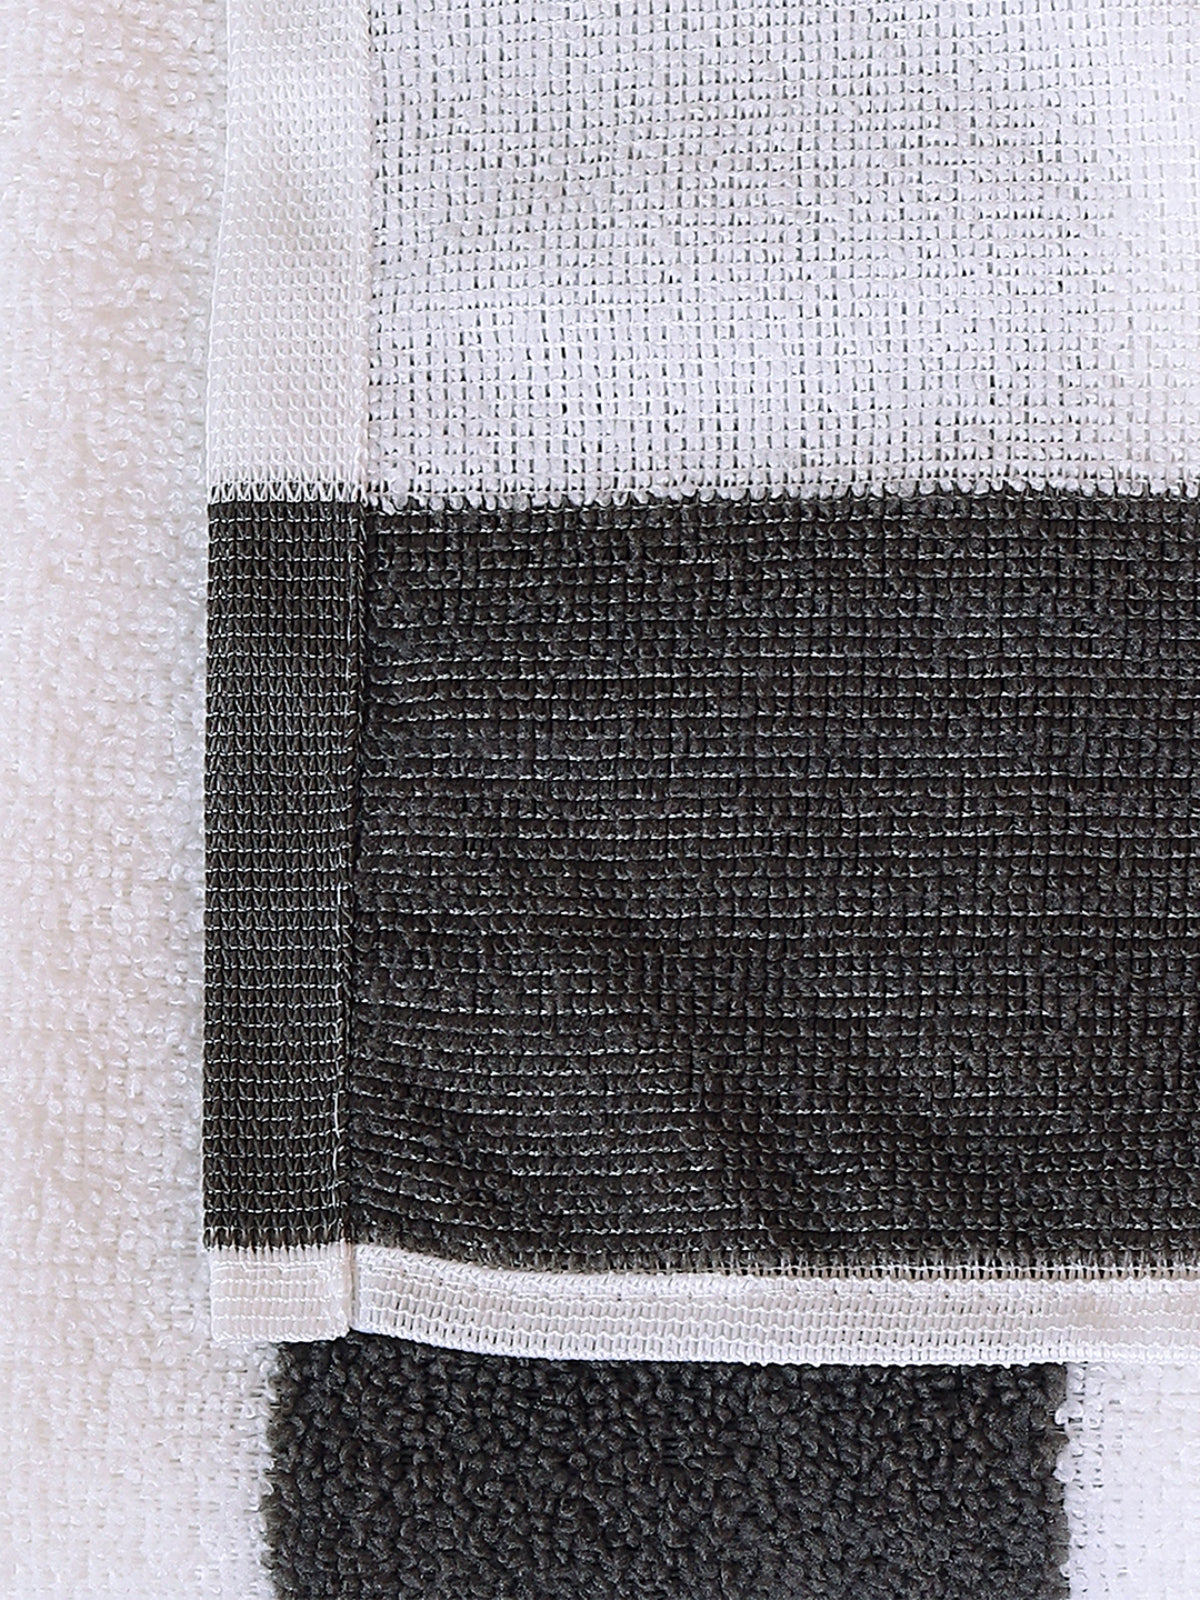 Grey Stripes Patterned Microfiber Towel